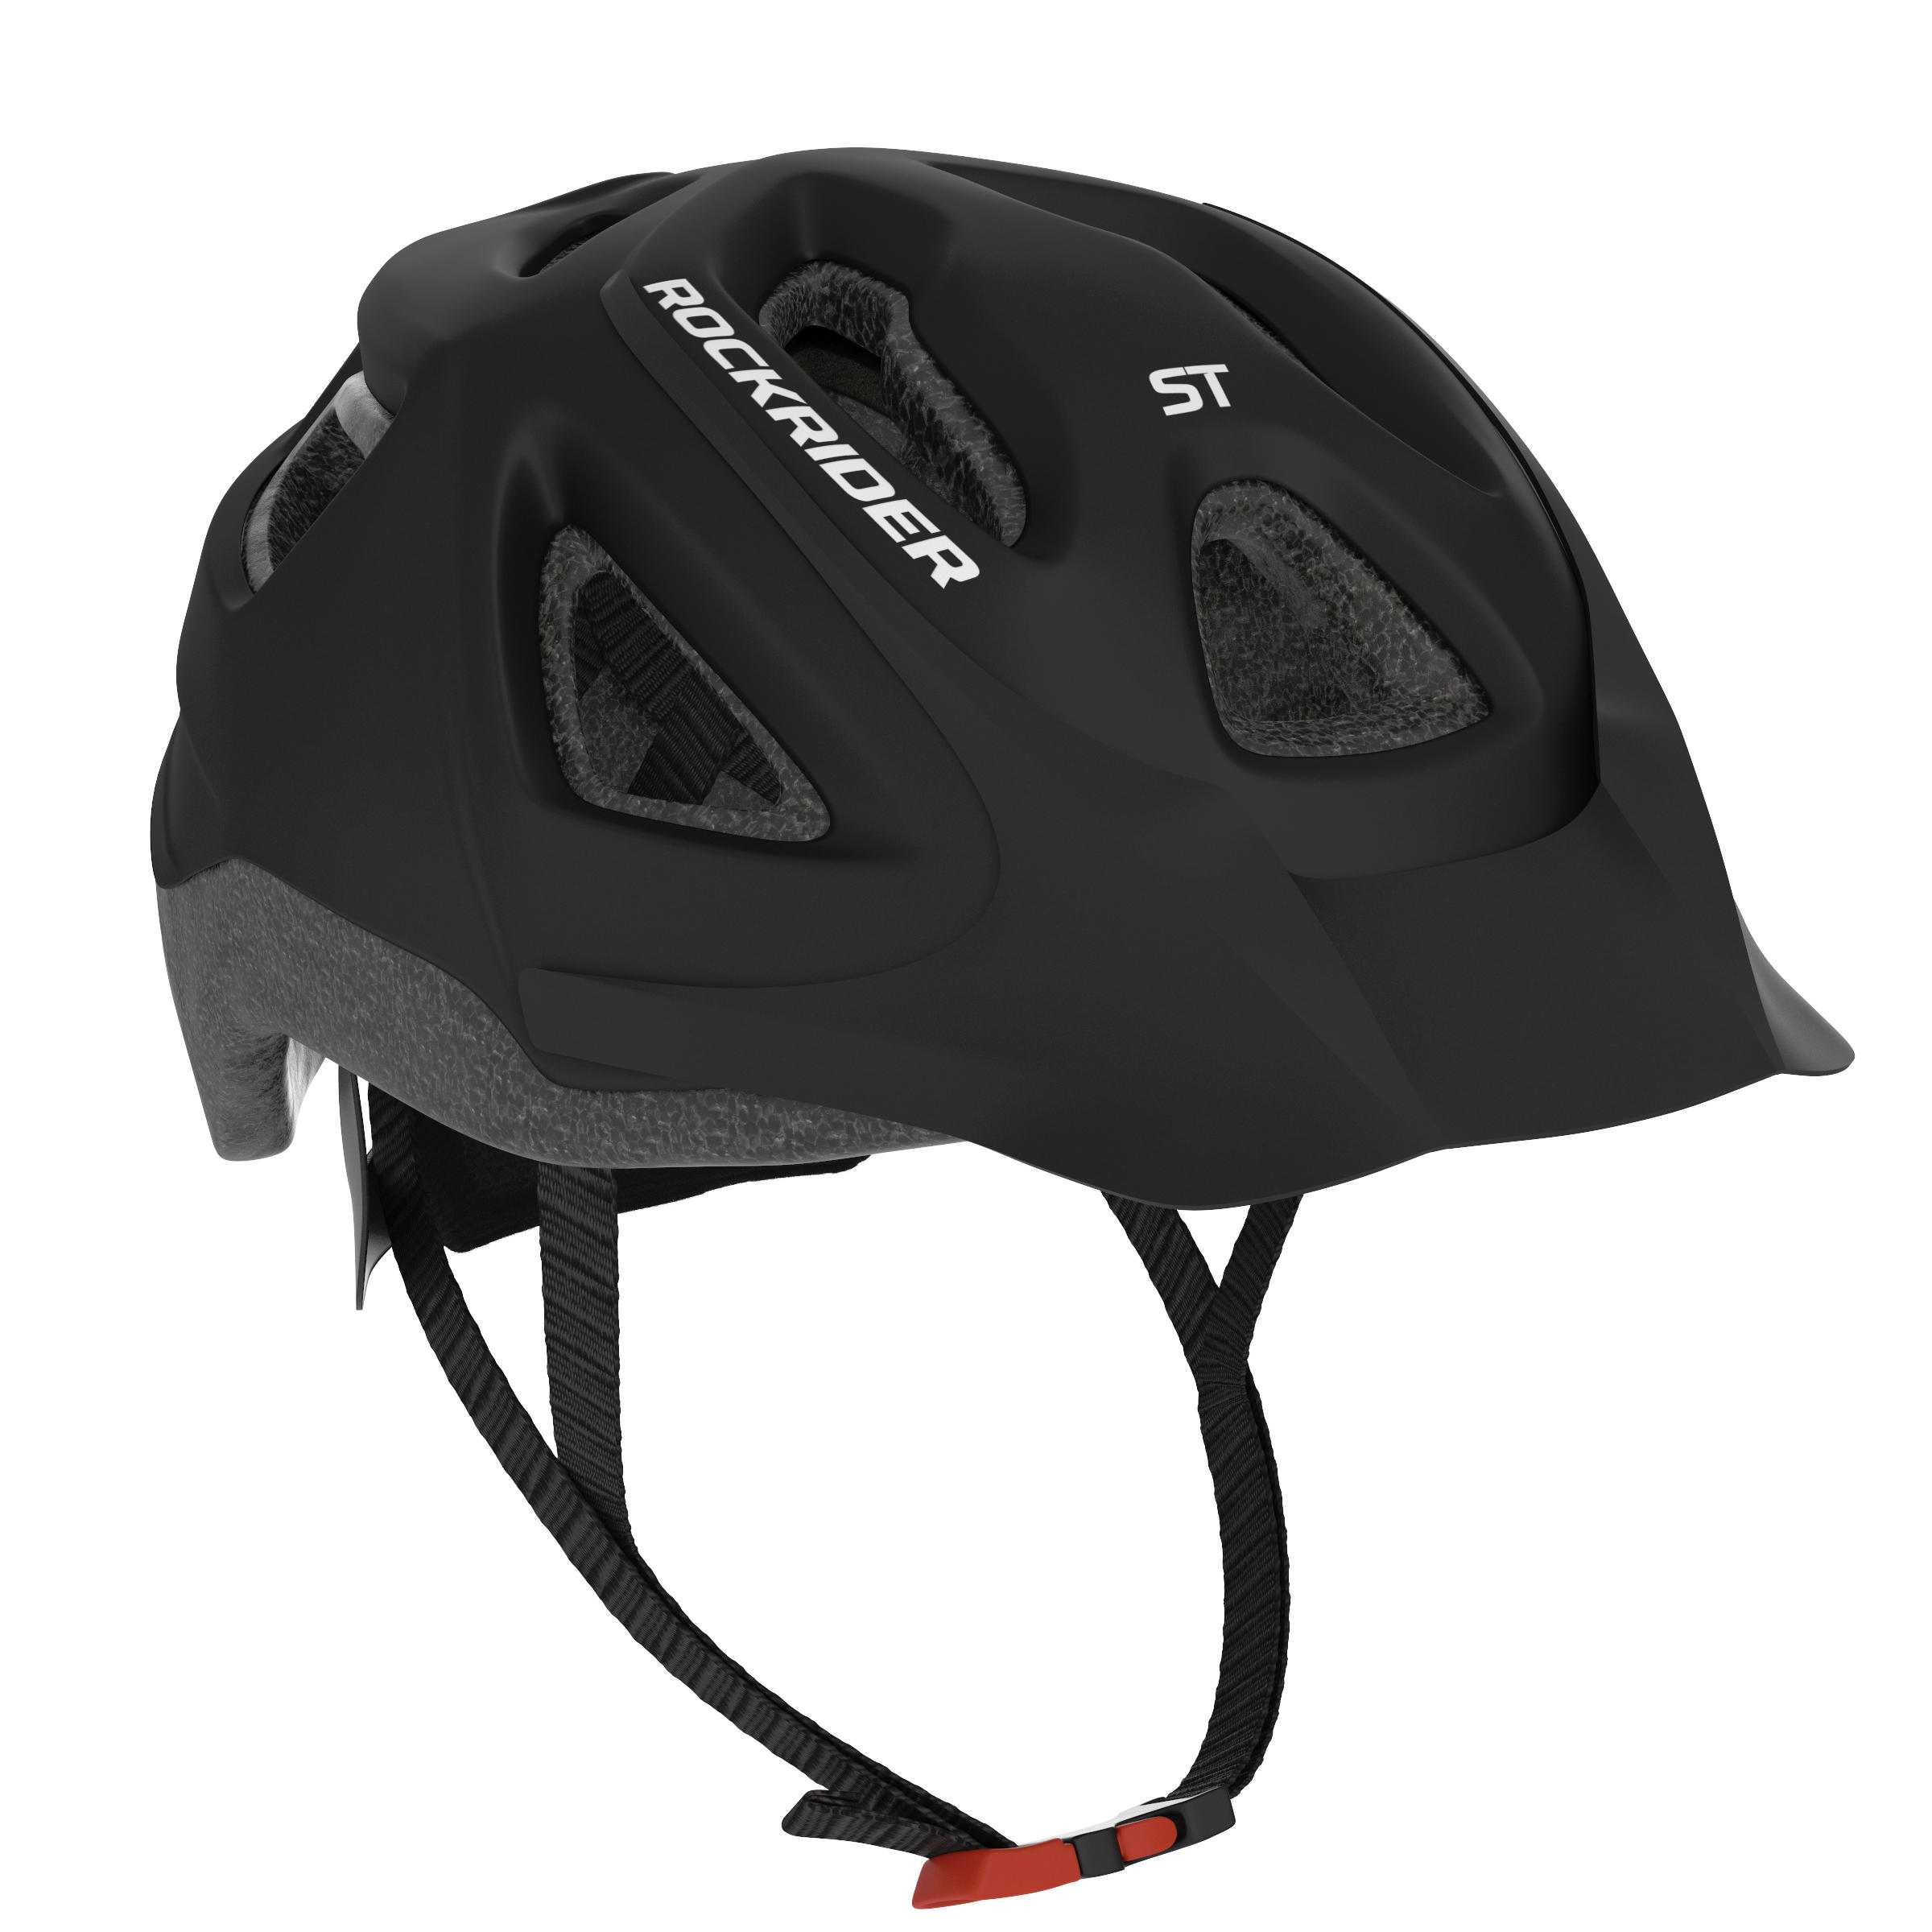 decathlon bike helmet